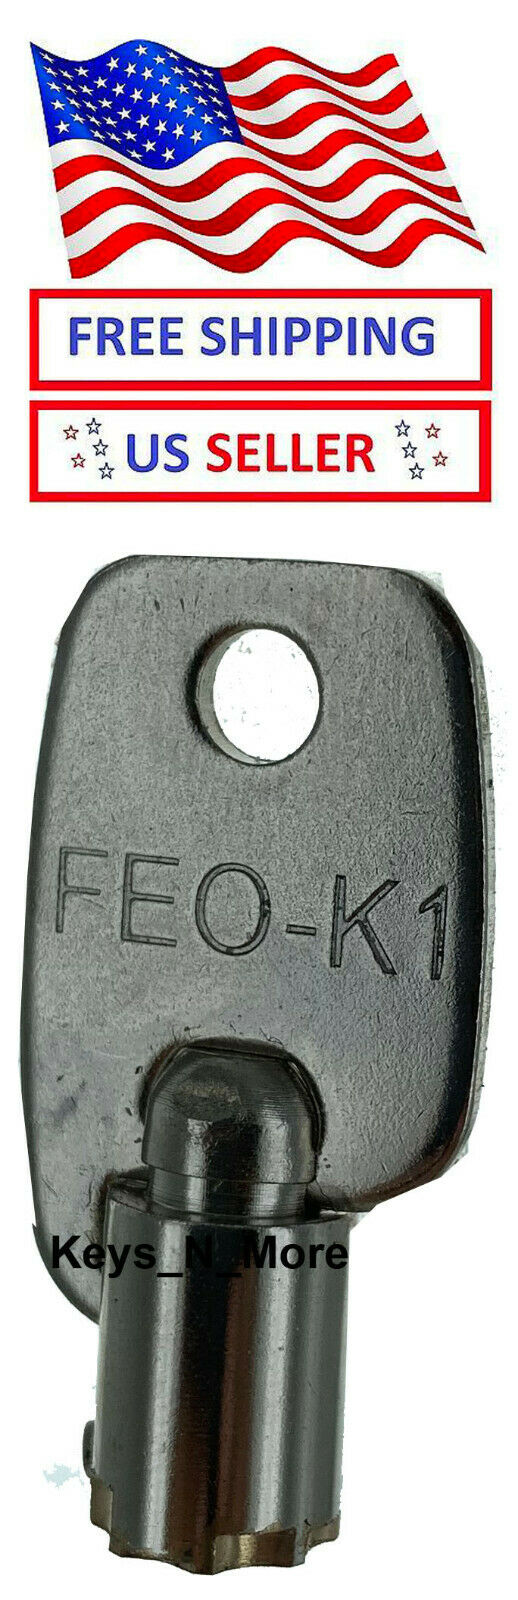 Feo-k1 Elevator Key Fire Service New Feok1 - - Fast Shipping